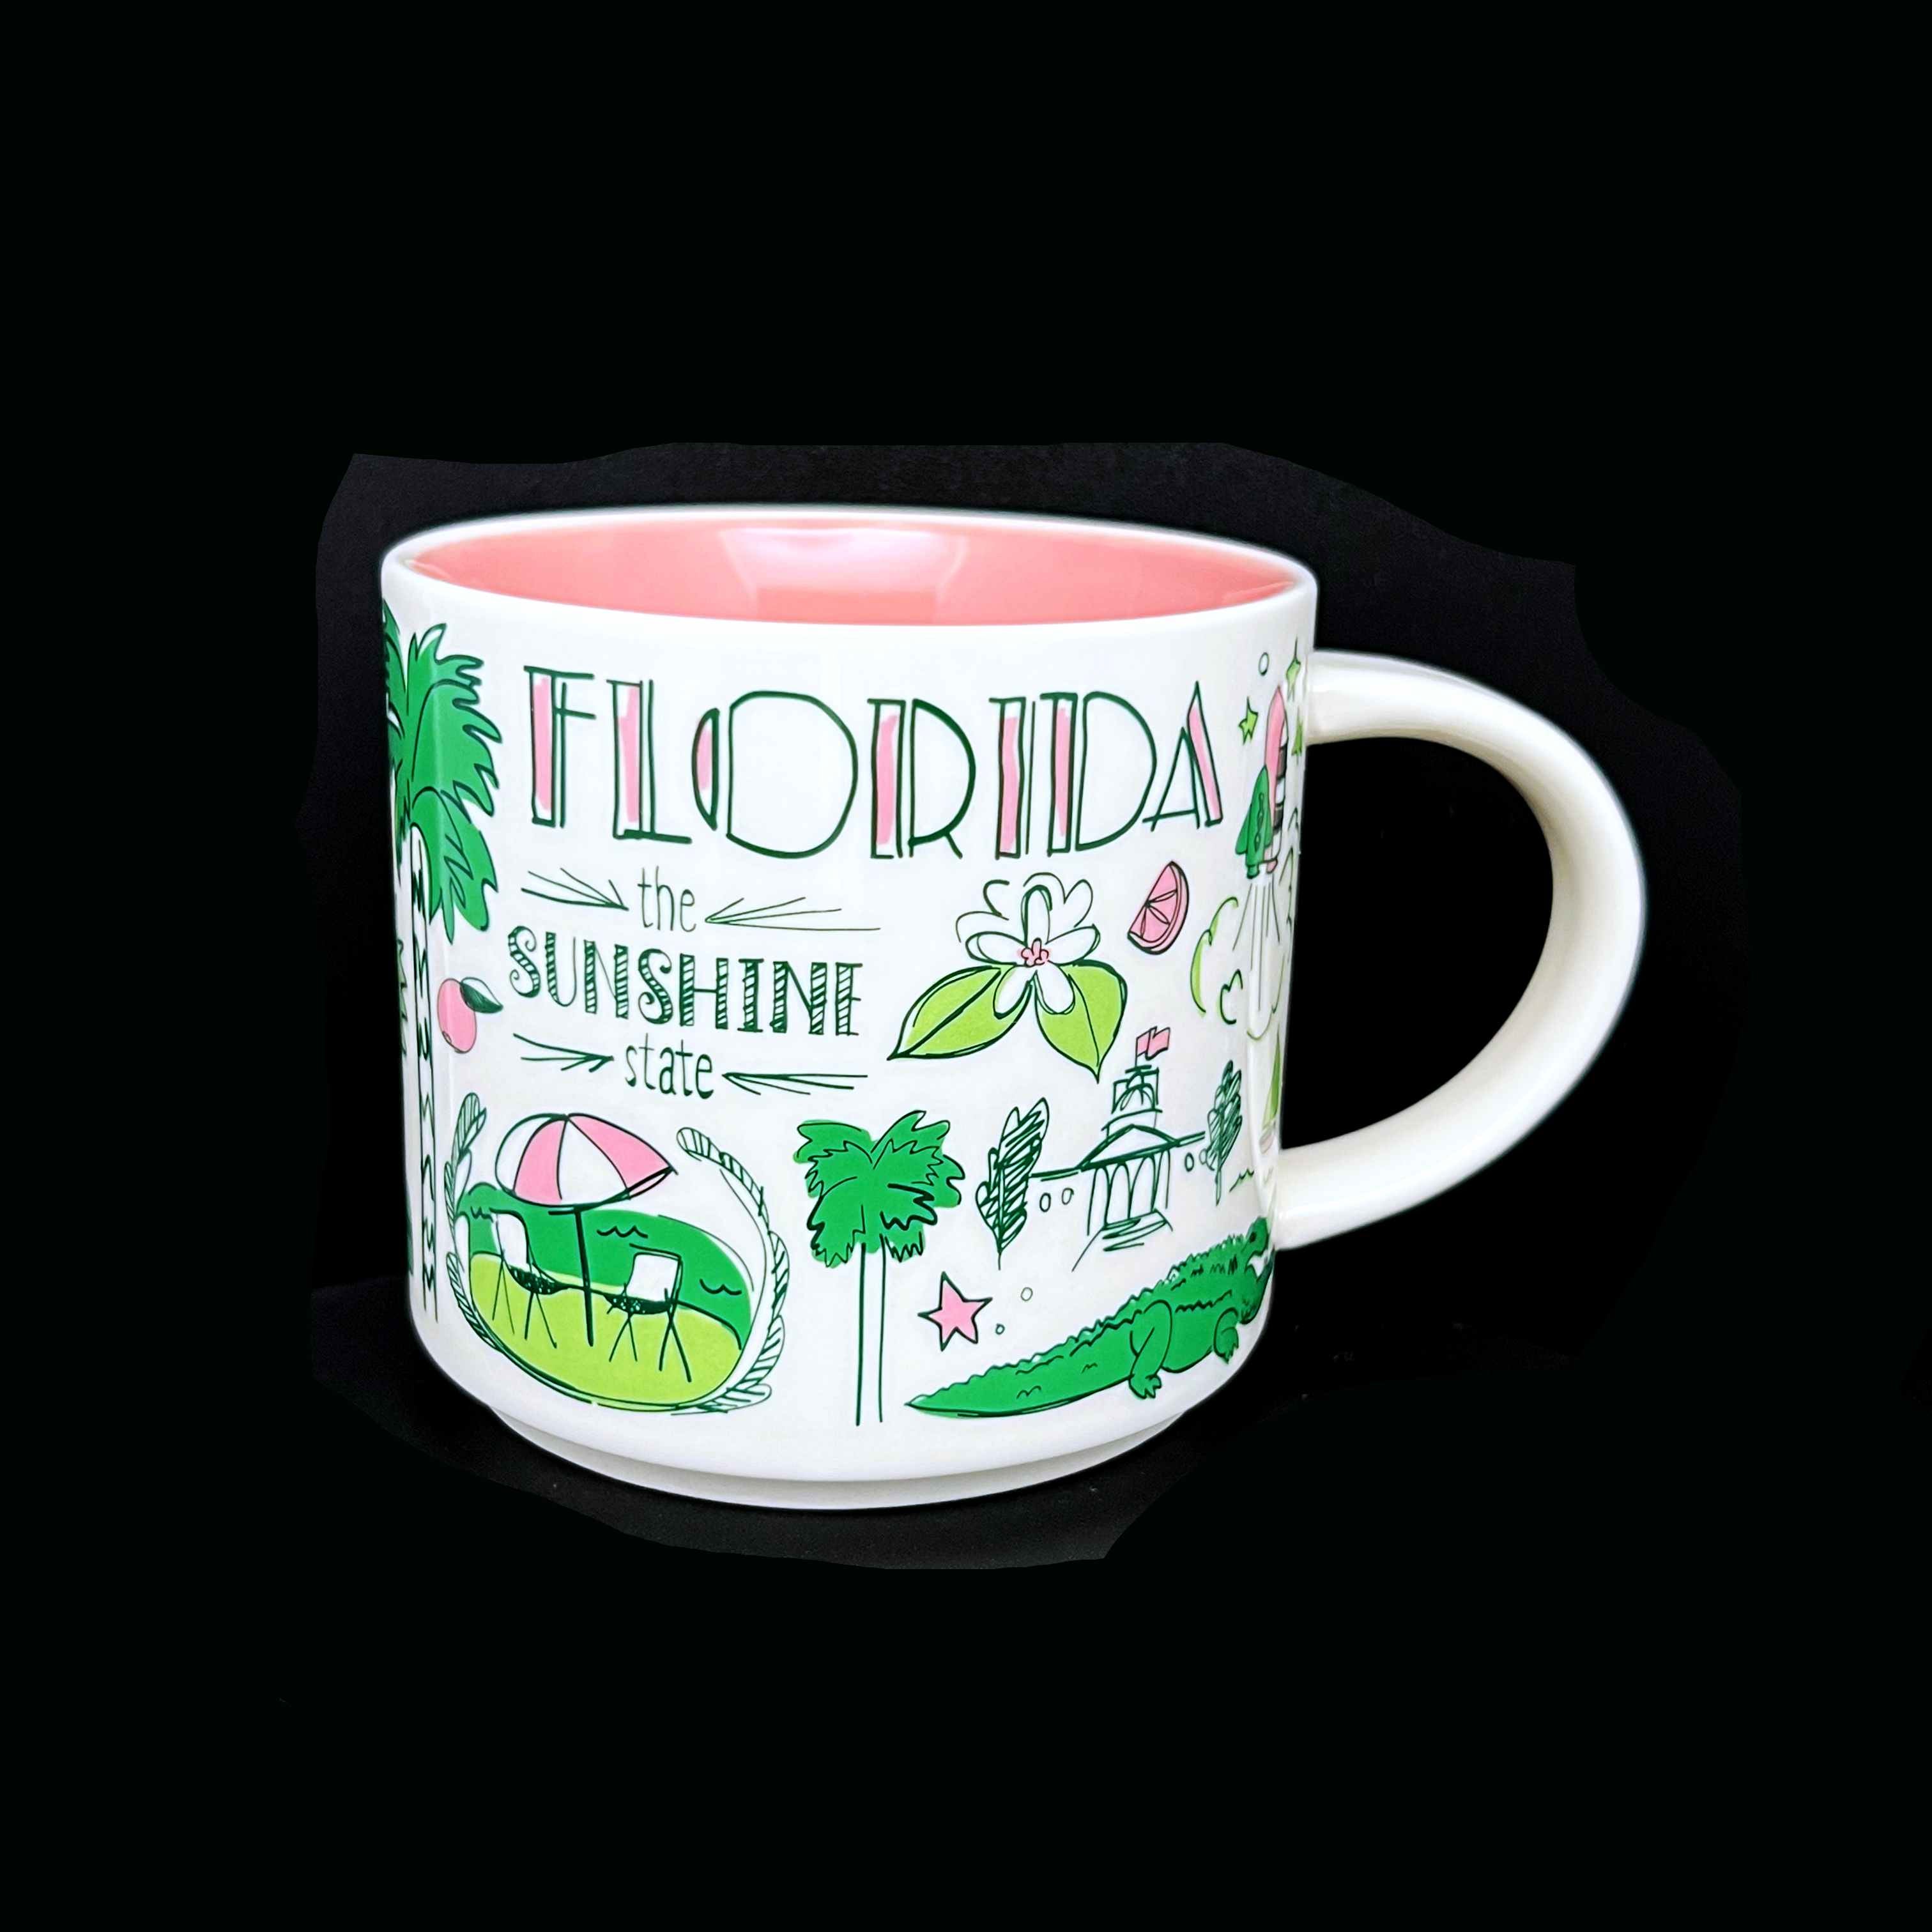 Starbucks Coffee Kaffee Tasse Tee Becher Bilder Motive Collectibles Cup Mug, Florida